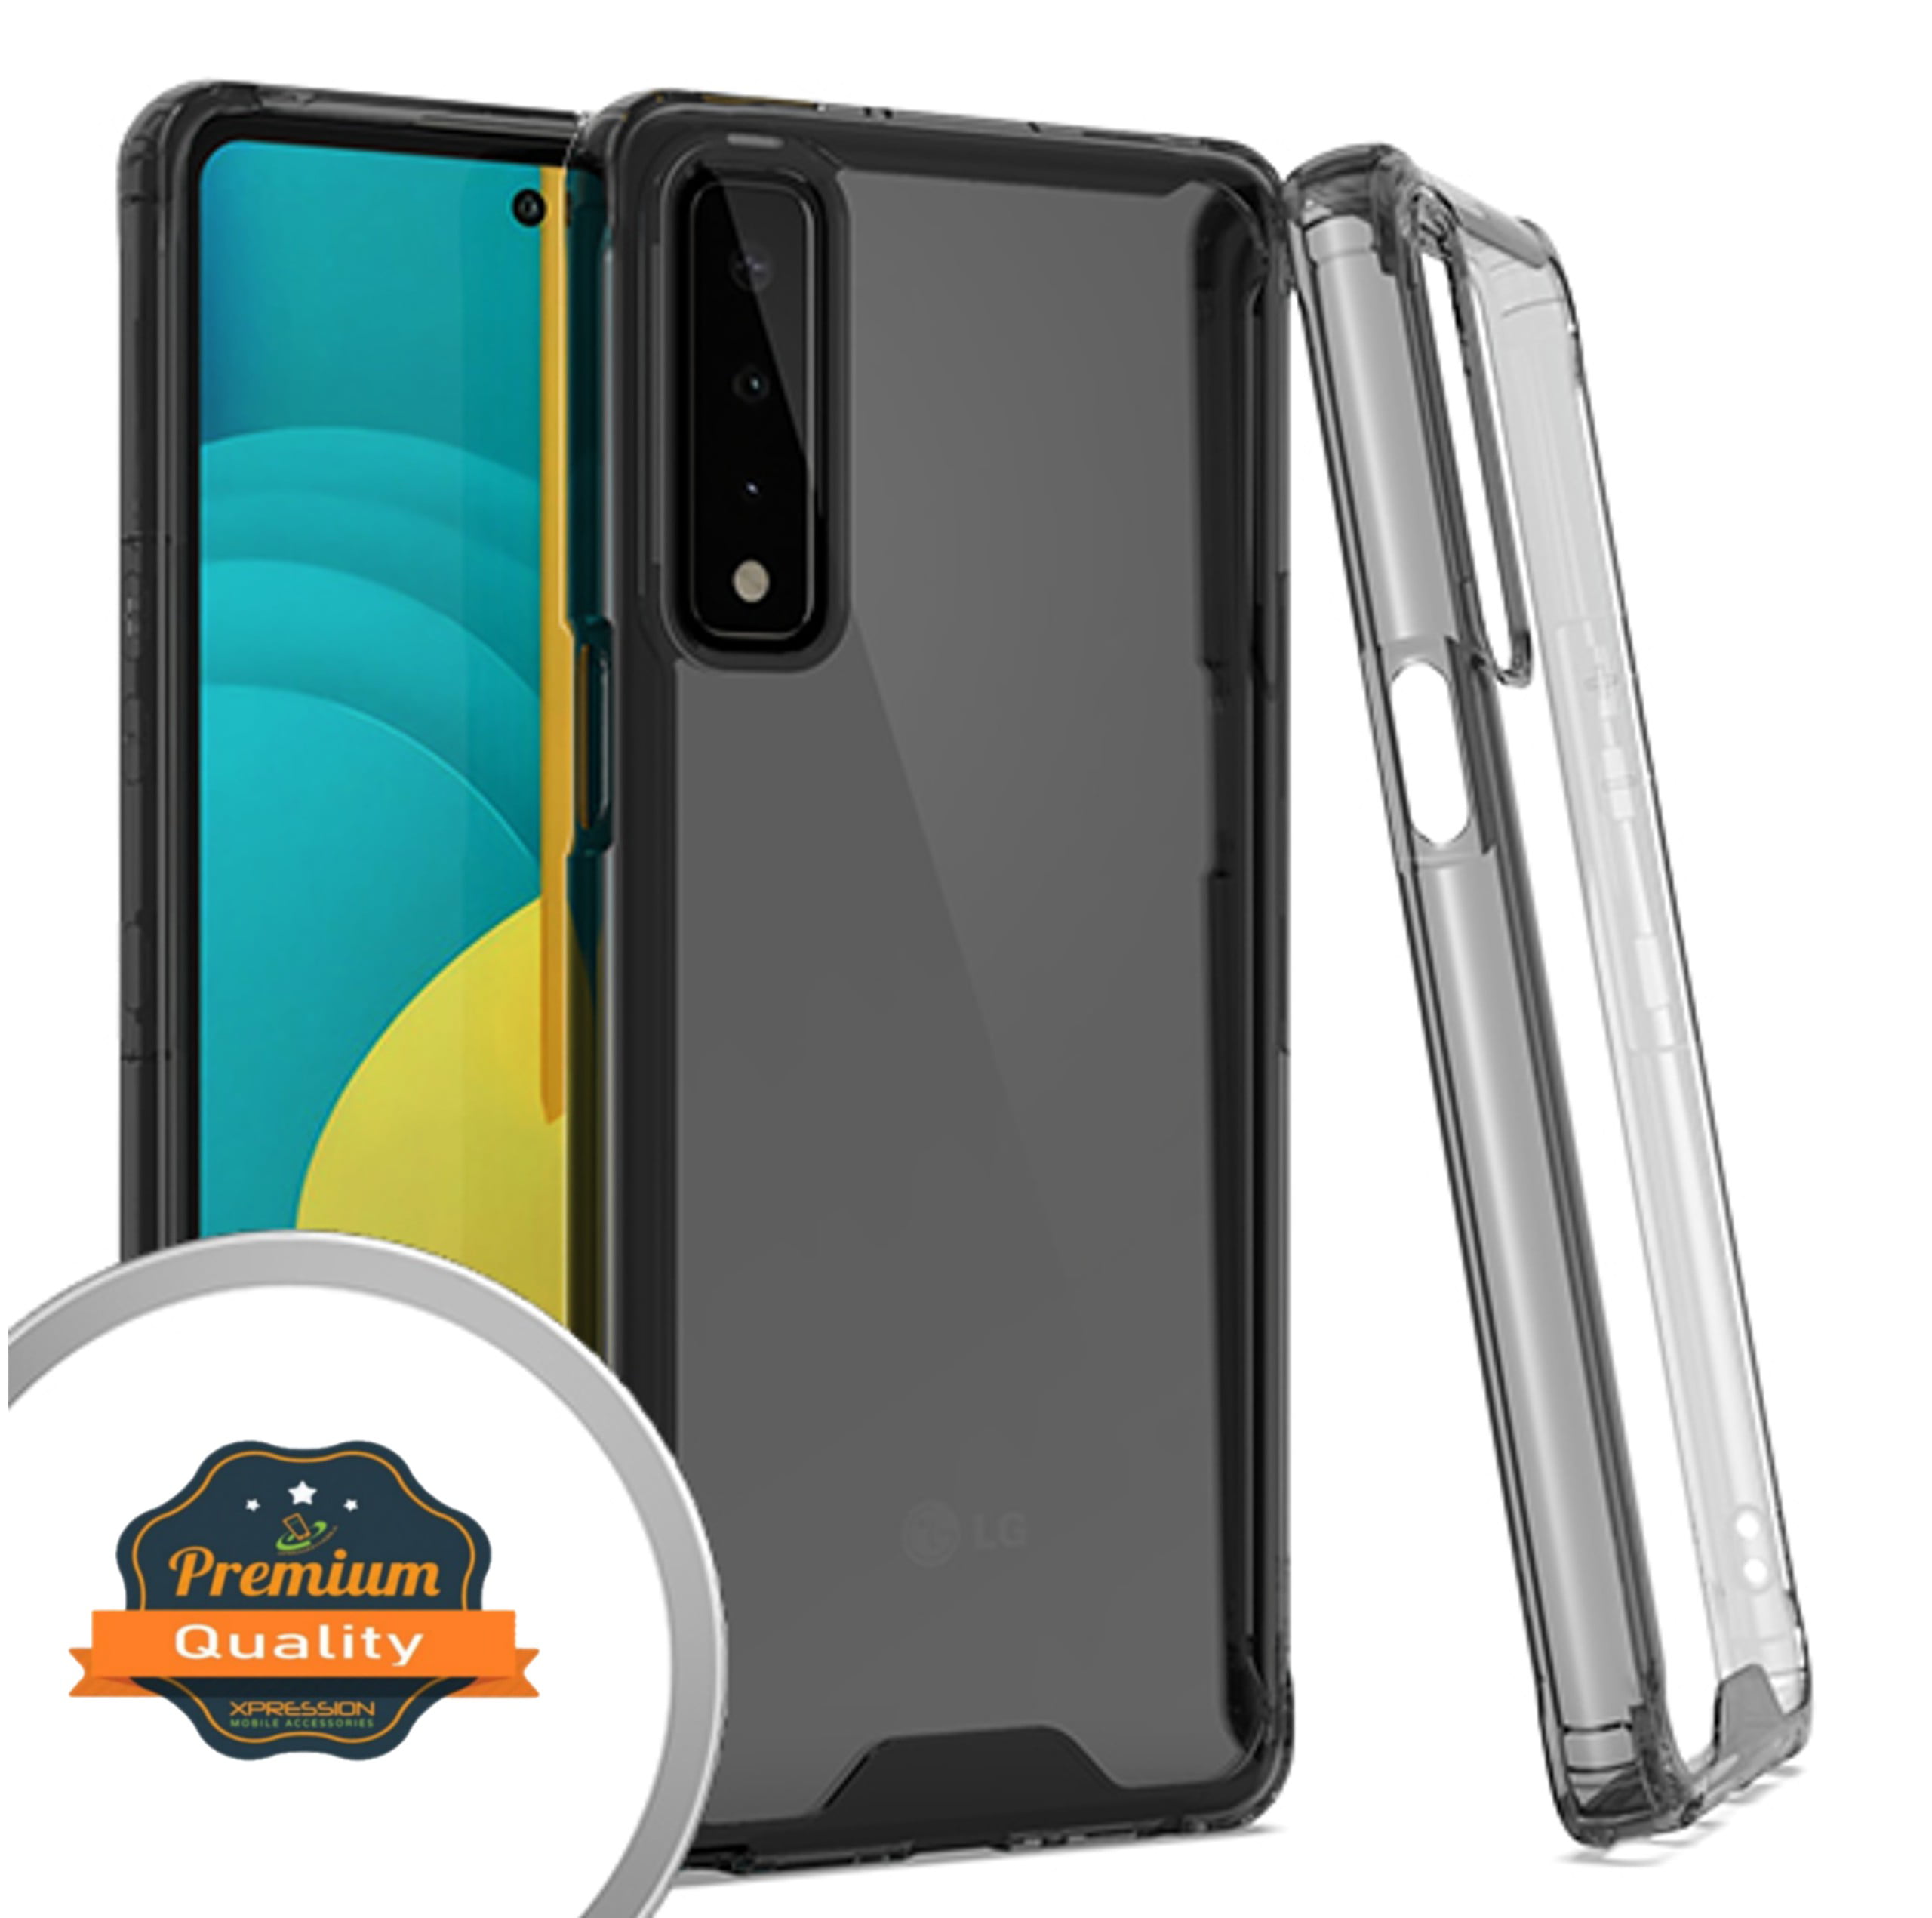 Xpression Case for Galaxy A72 5G Full Body Frame [Shock-Absorption] Rugged Hybrid Defender Rubber Gummy TPU Hard Protective Phone [Smoke Black] - Walmart.com